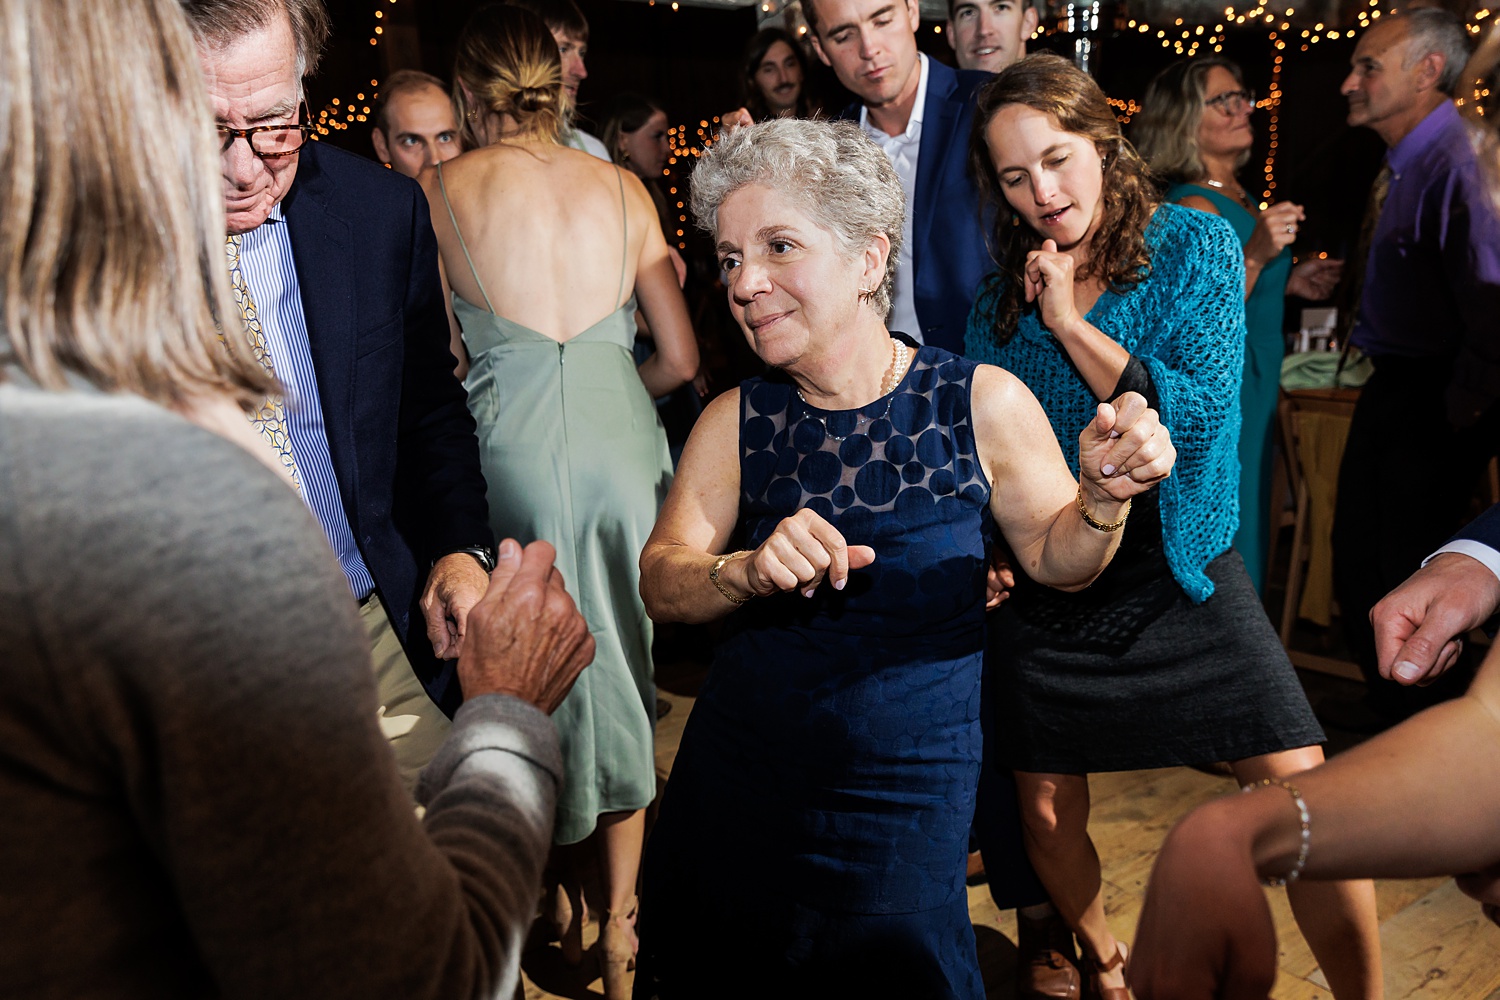 Dancing at the wedding reception